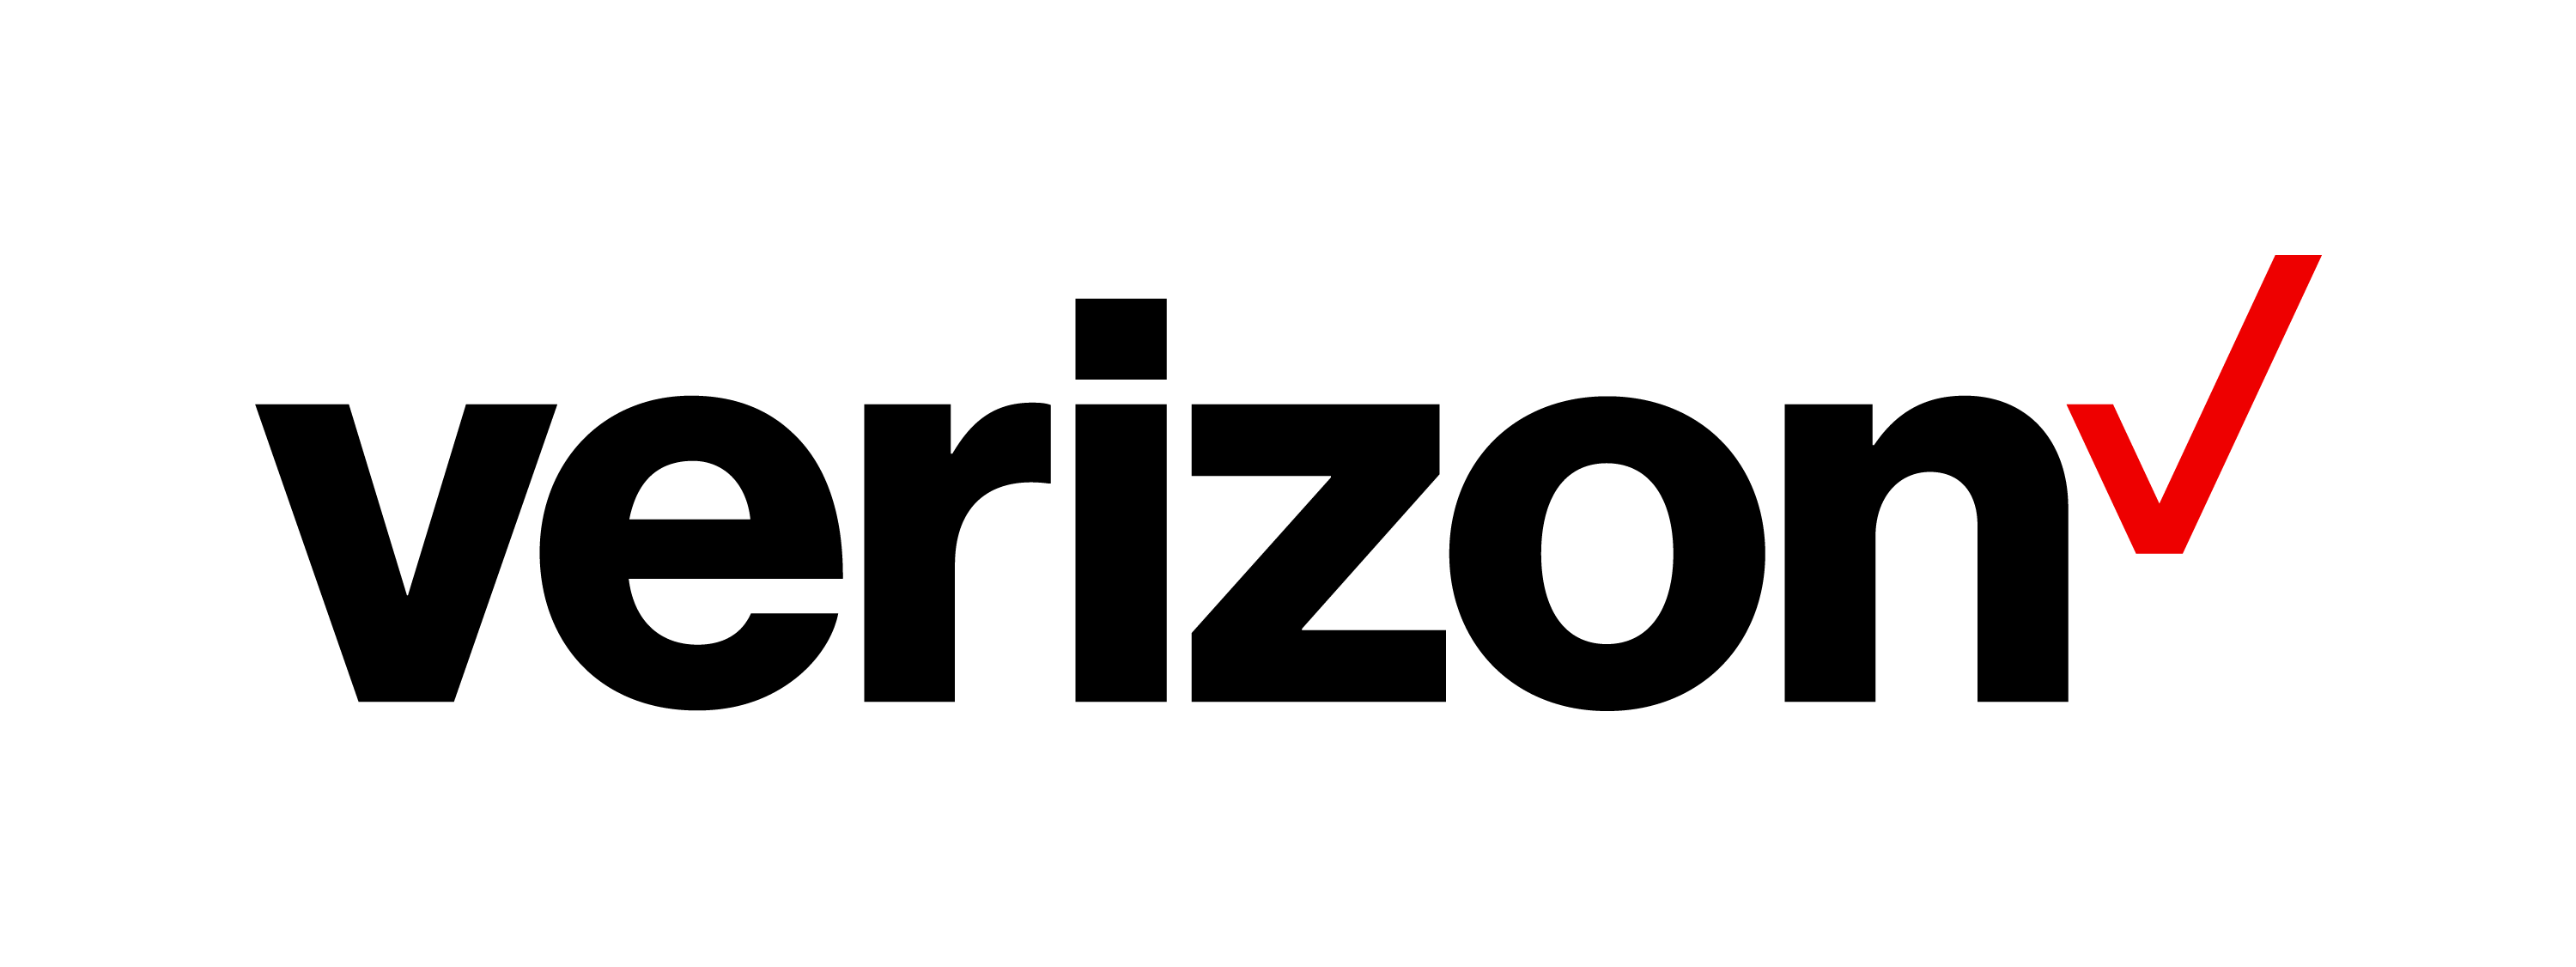 Verizon And Mongodb: Pioneering 5G Connectivity And Data Storage | Mongodb